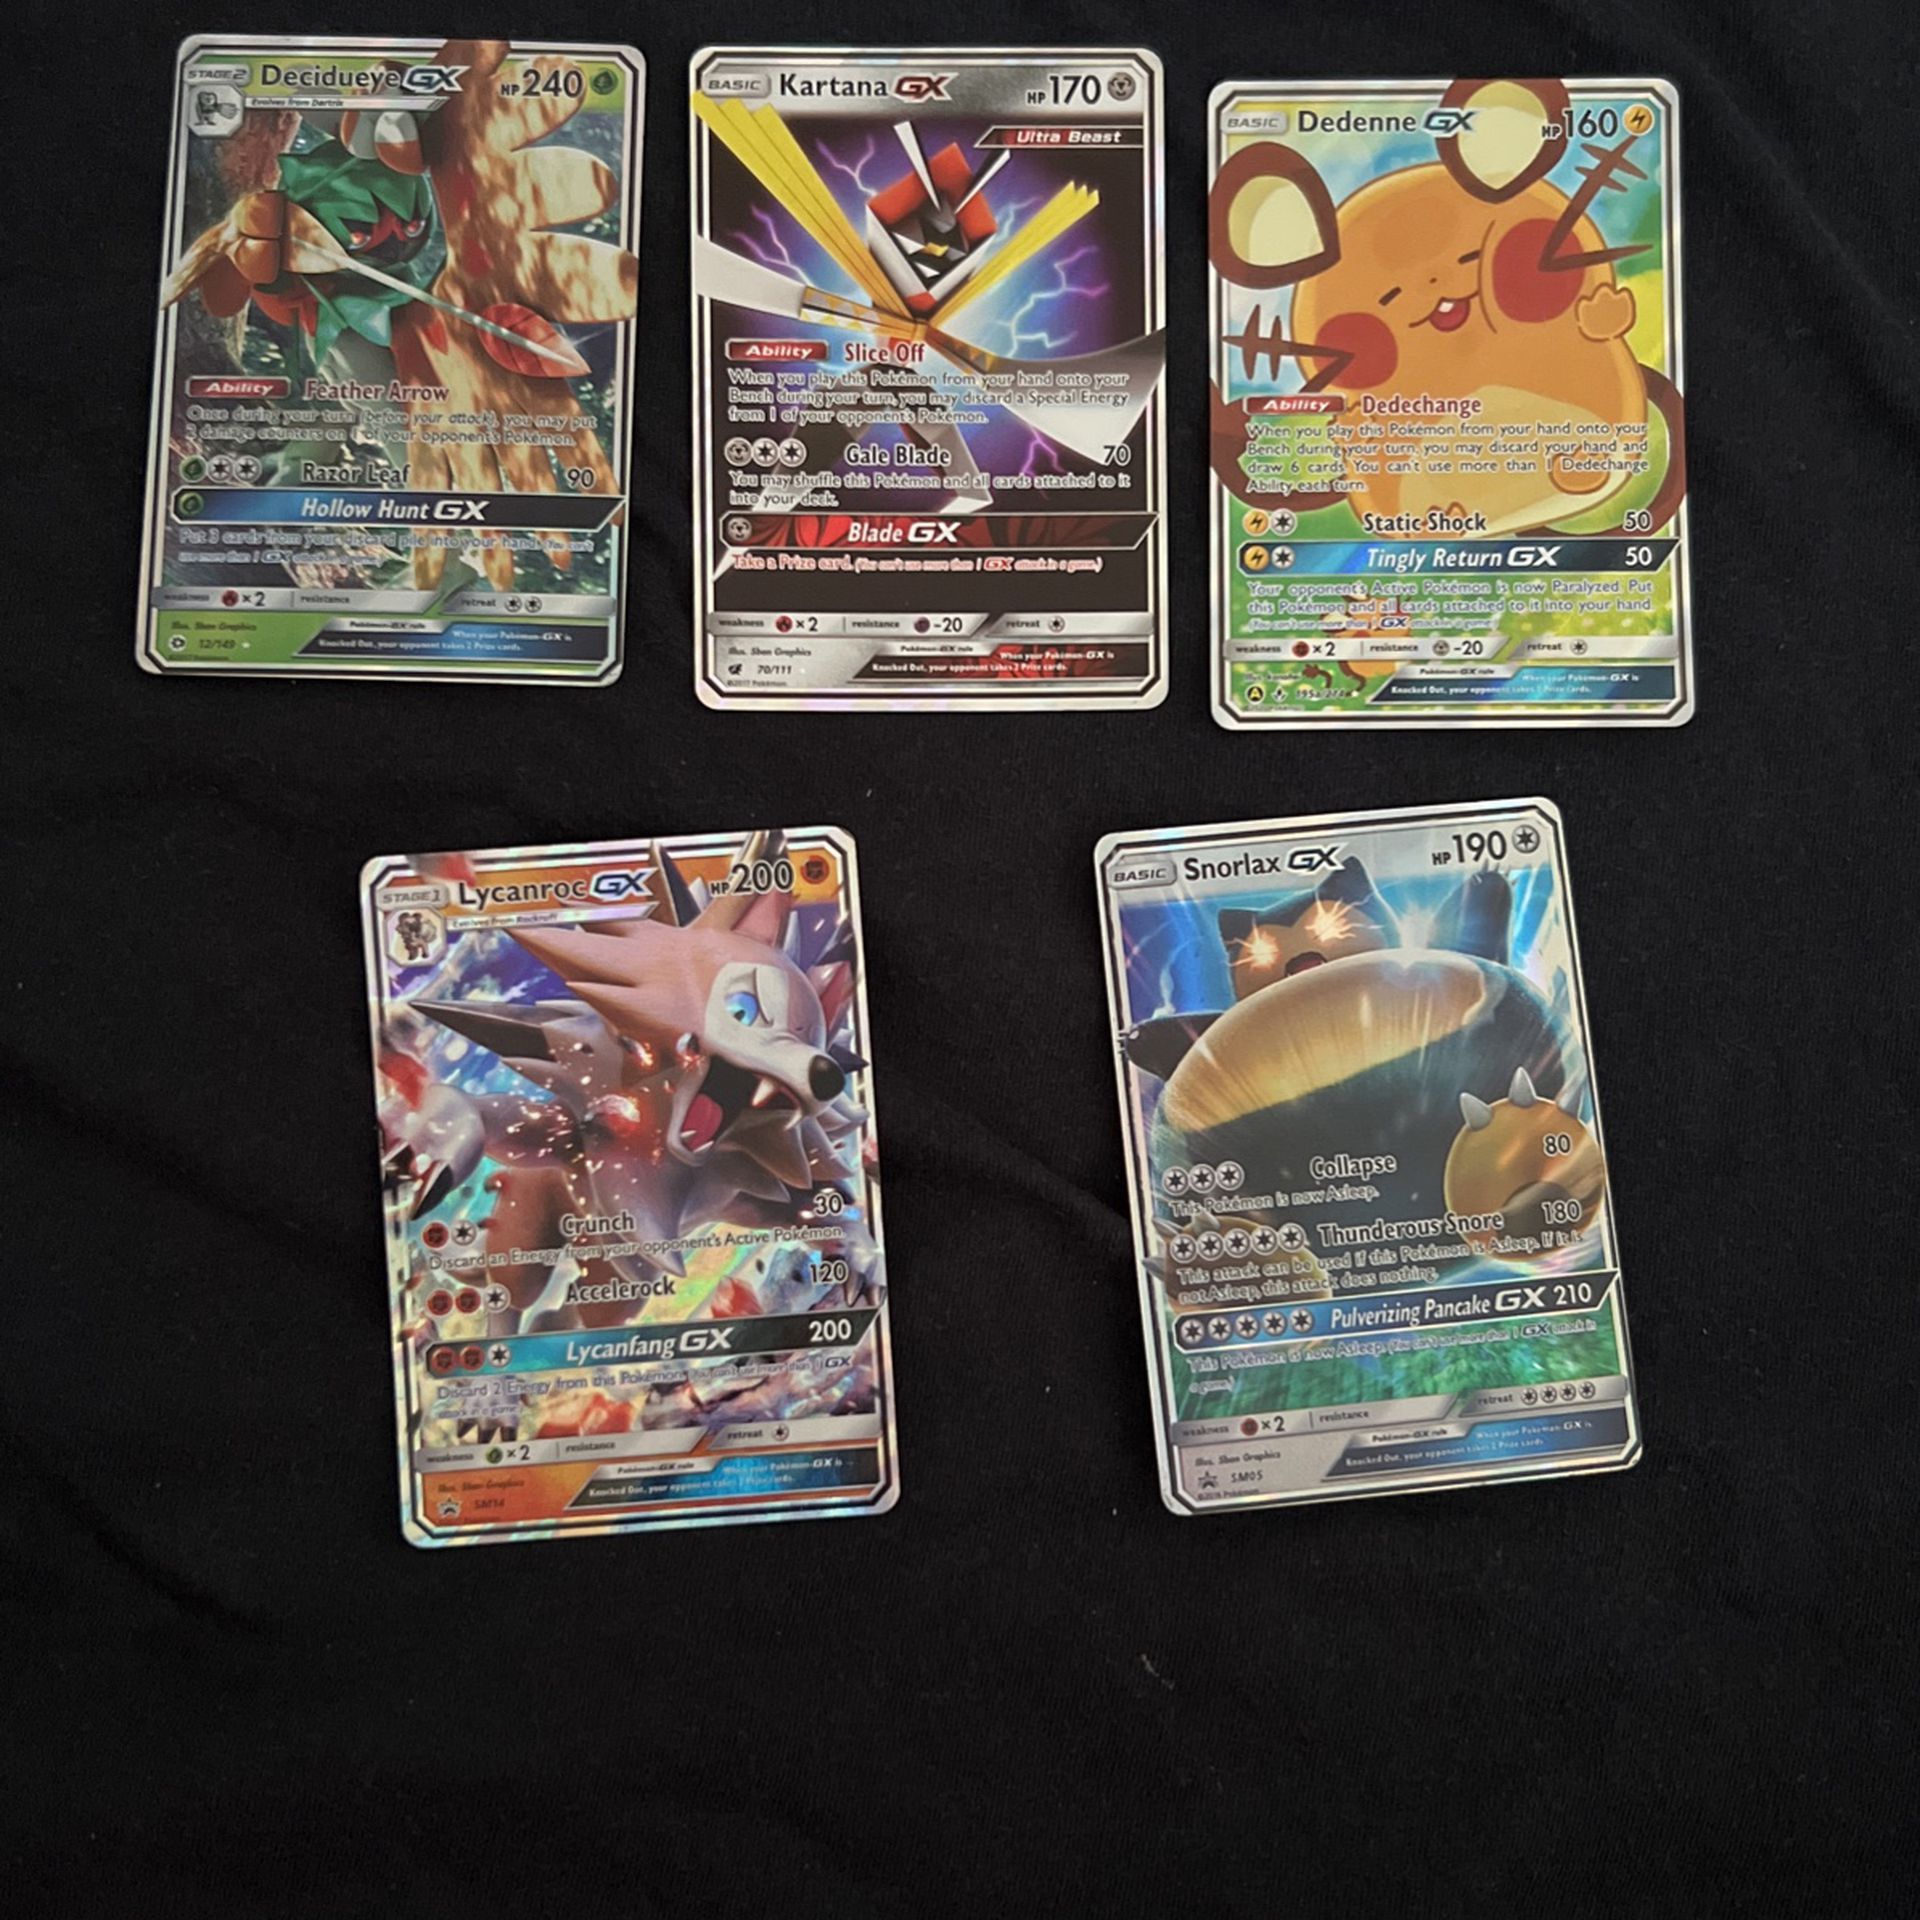 5 GX pokemon cards